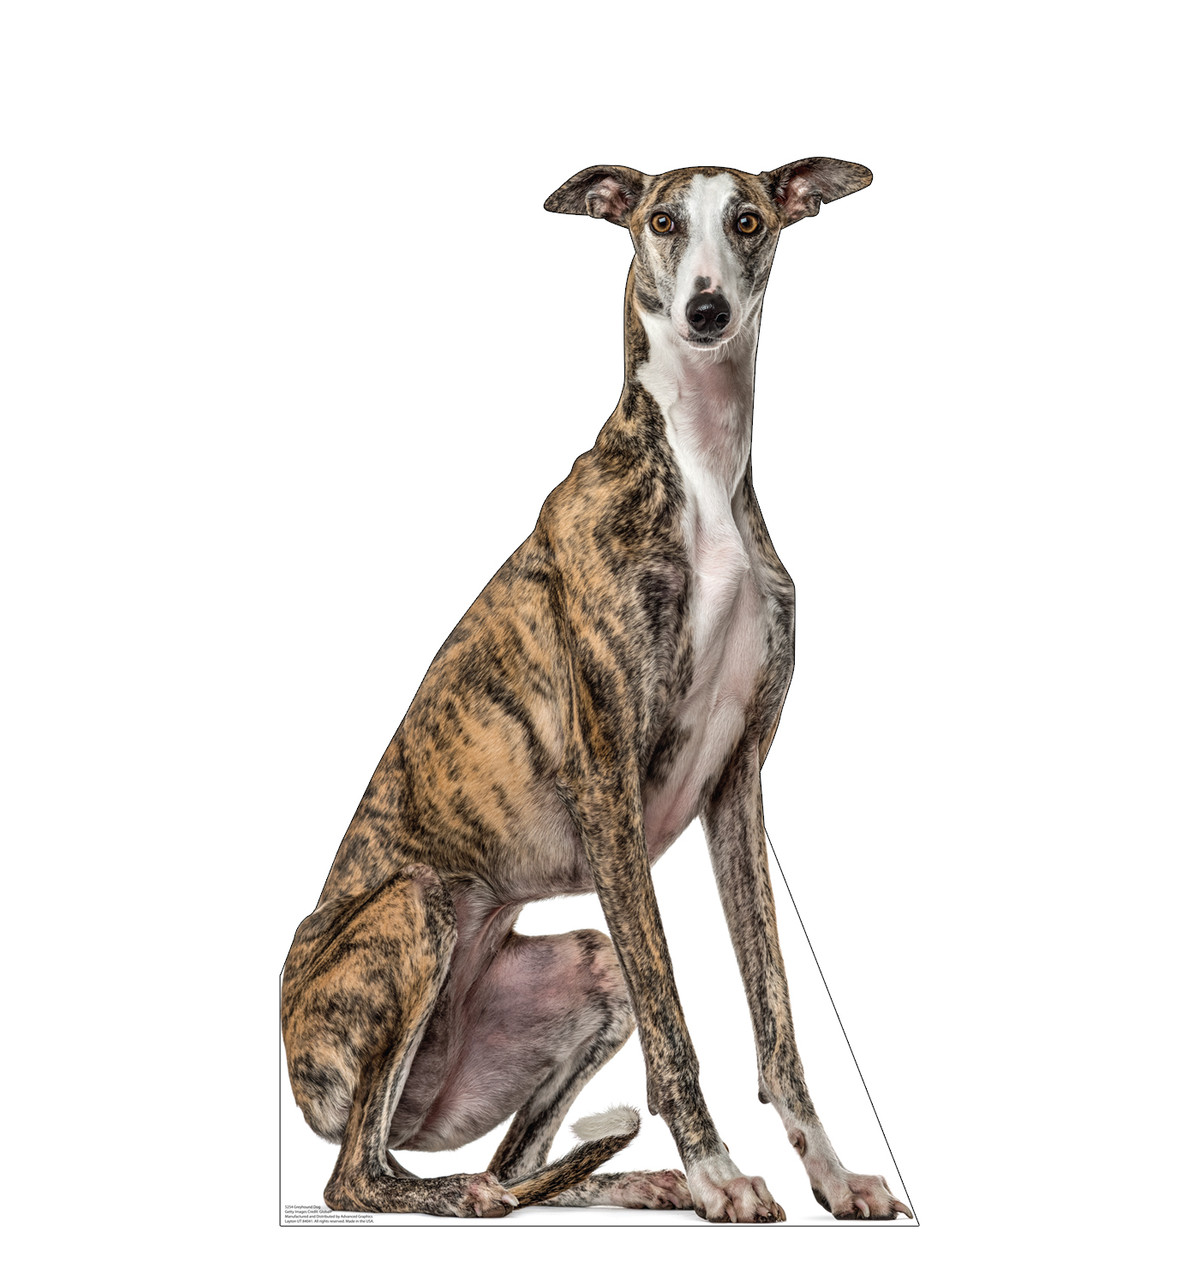 Life-size cardboard standee of a Greyhound Dog.